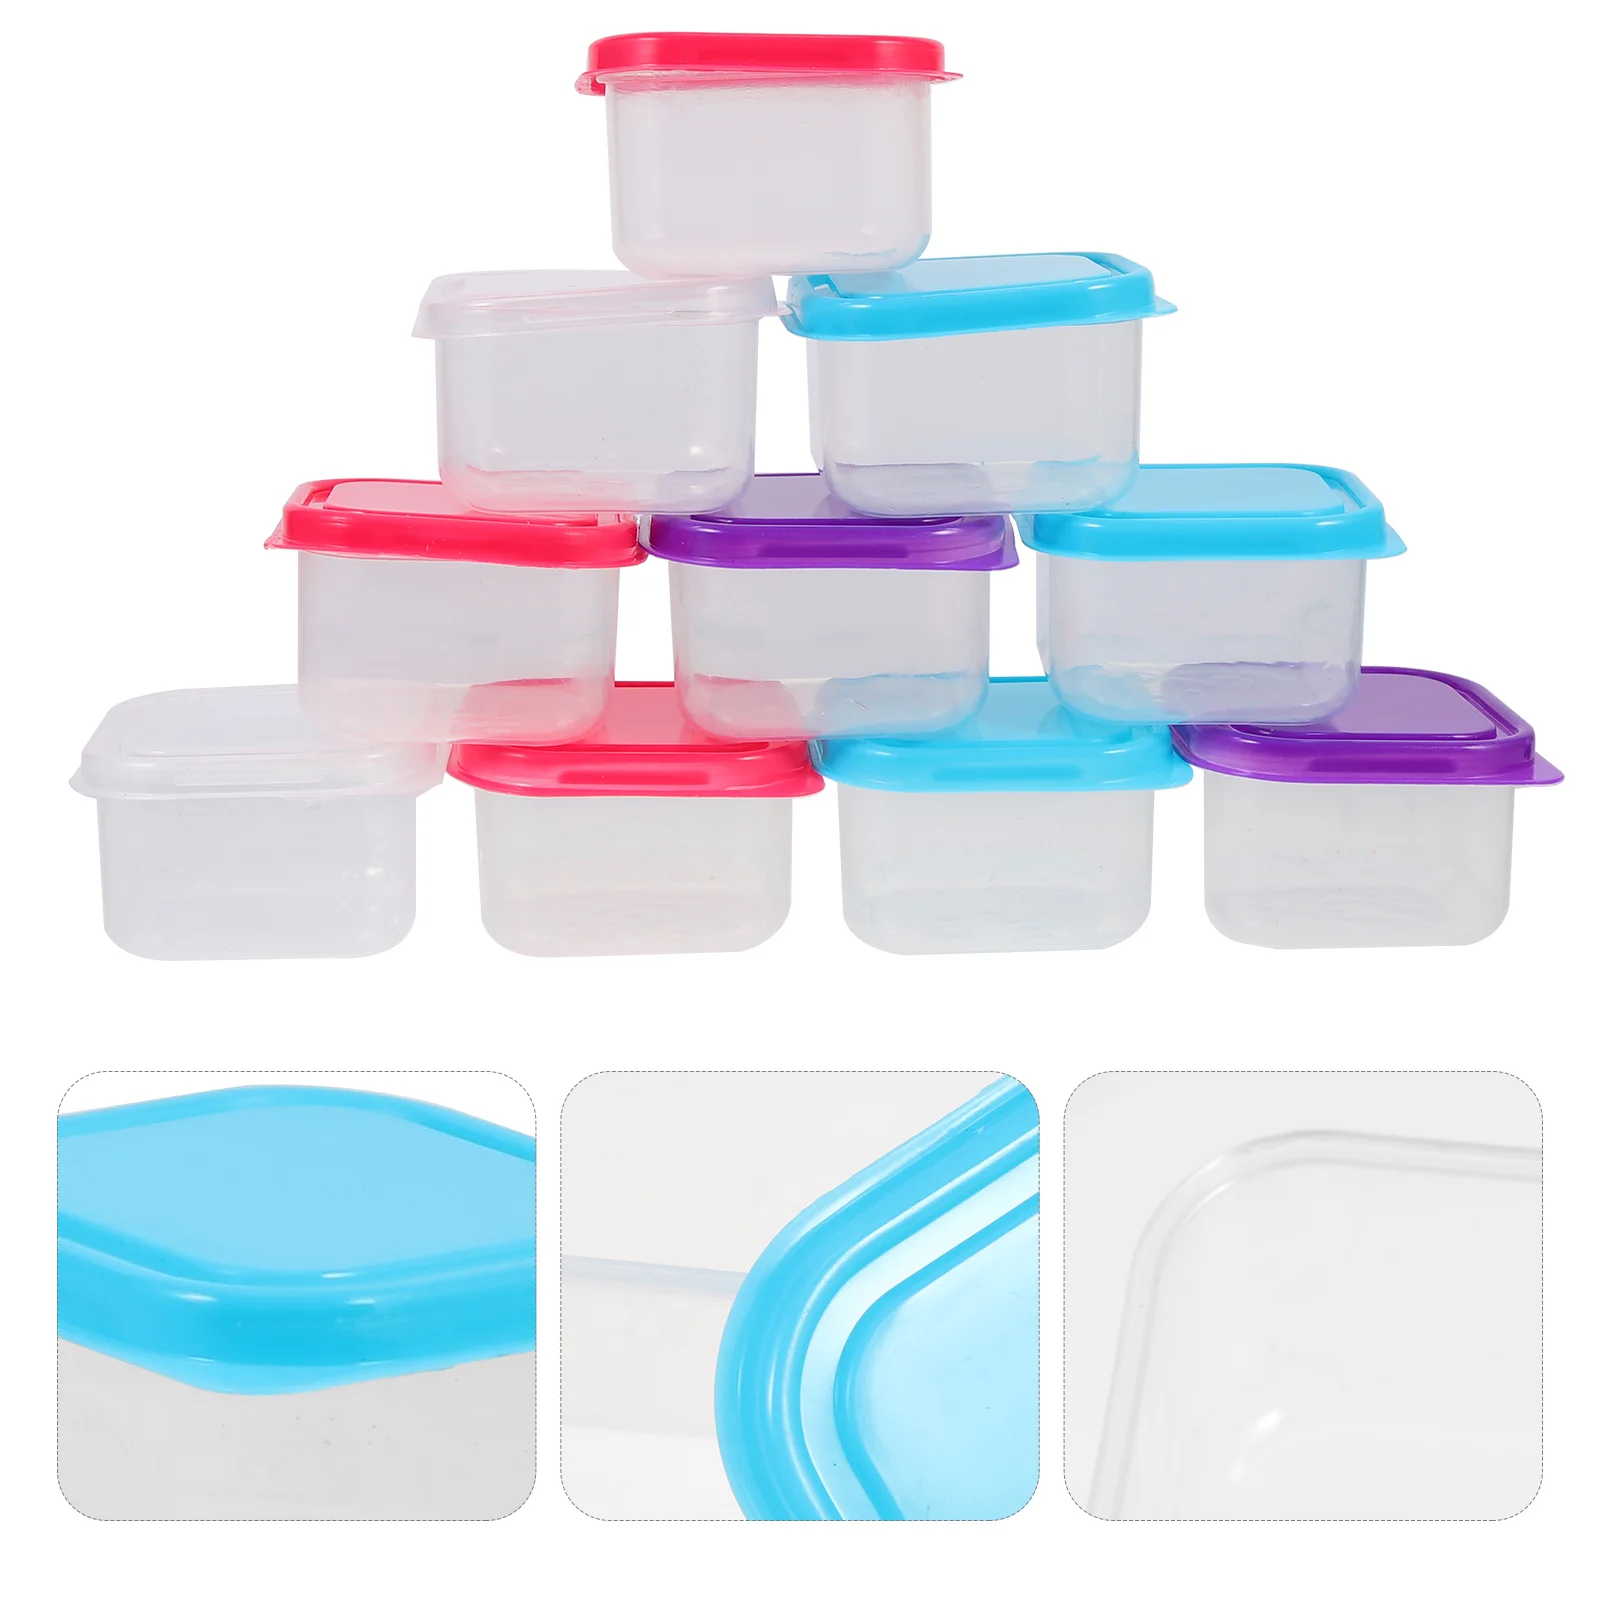 

Crisper Baby Food Container Fridge Organizer Condiment Storage Case Containers Plastic Bins Lids